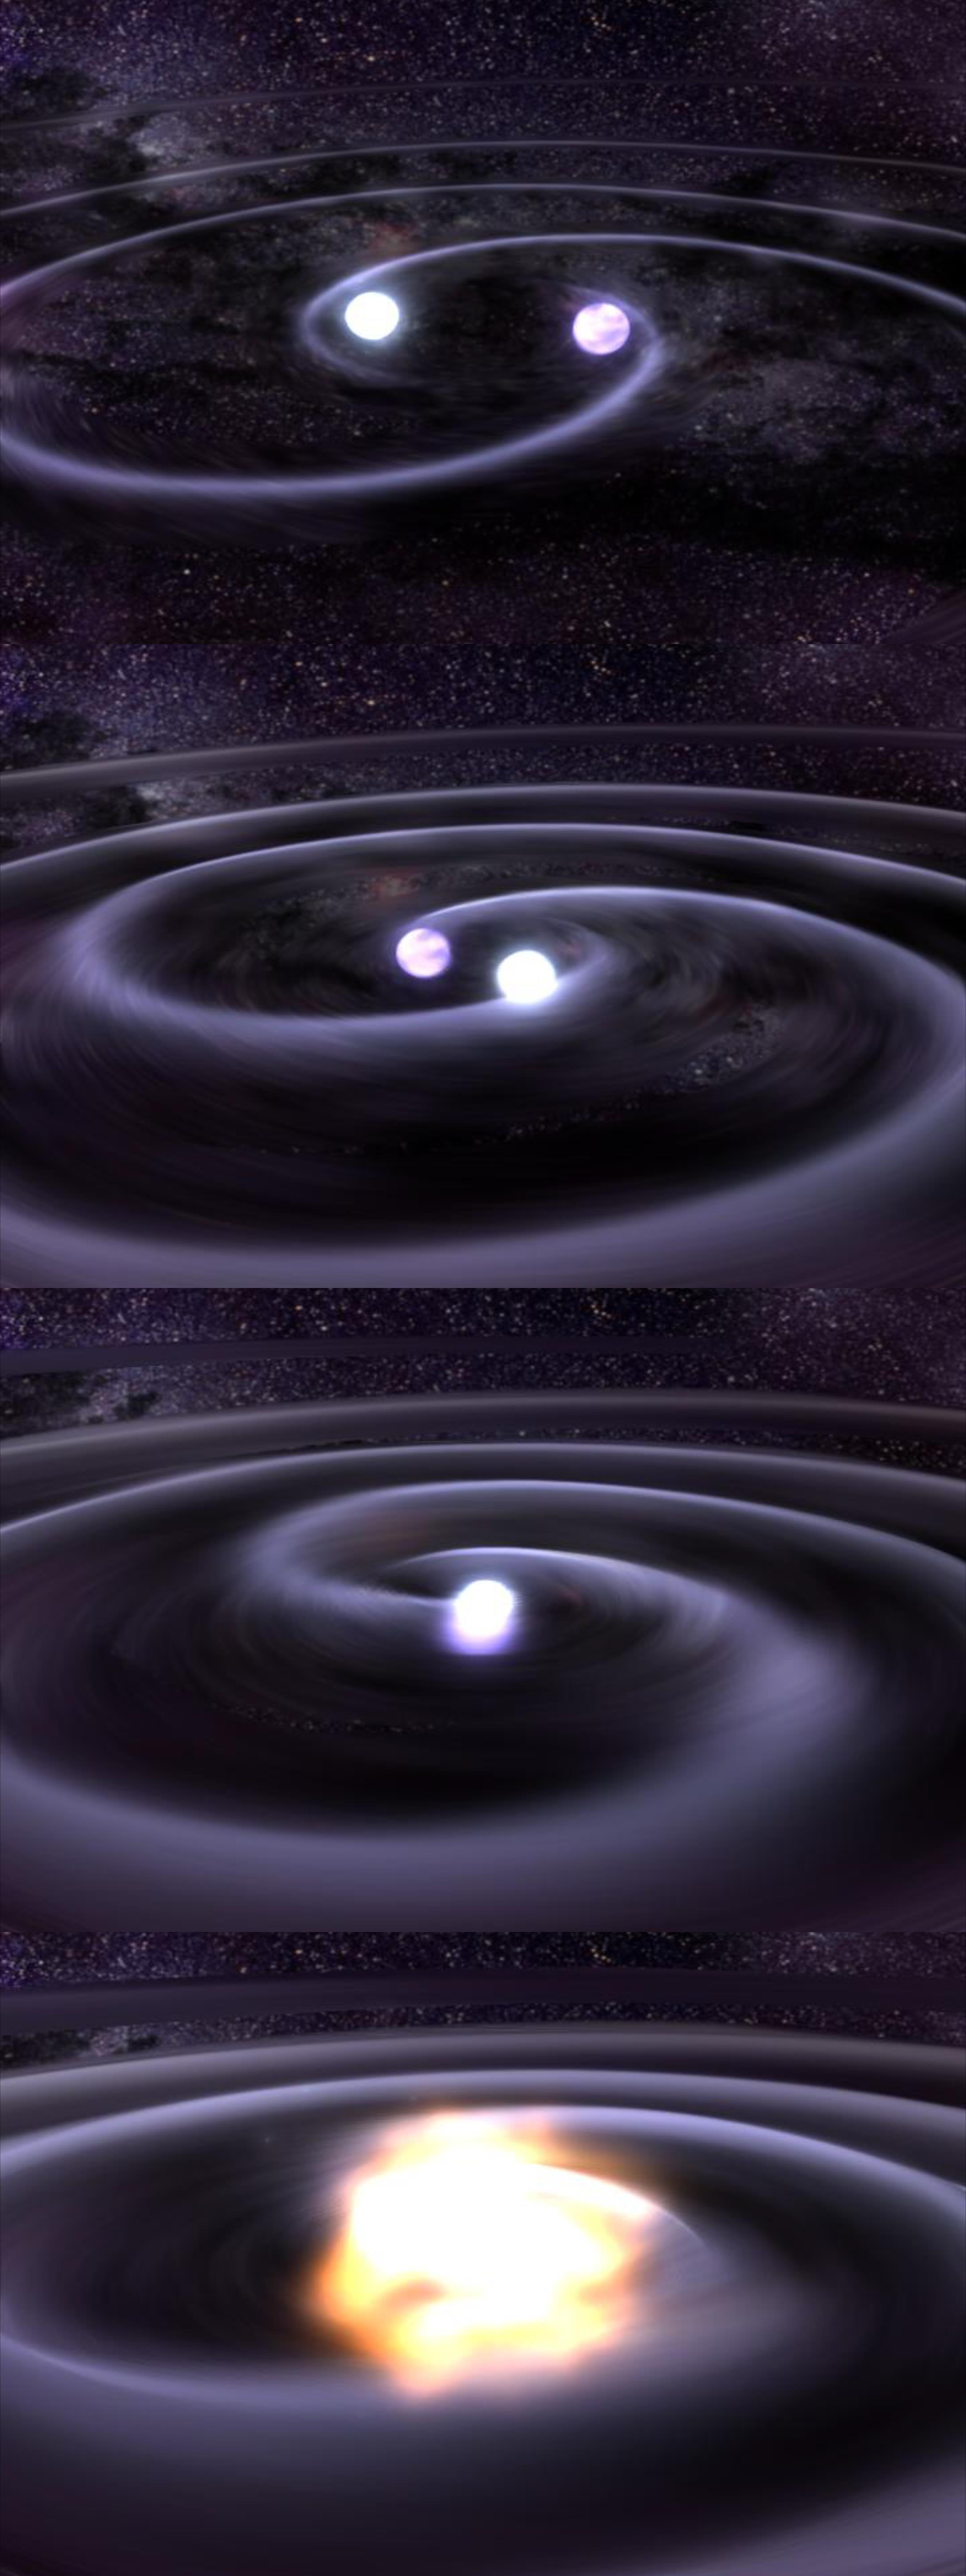 neutron star inspiral merge